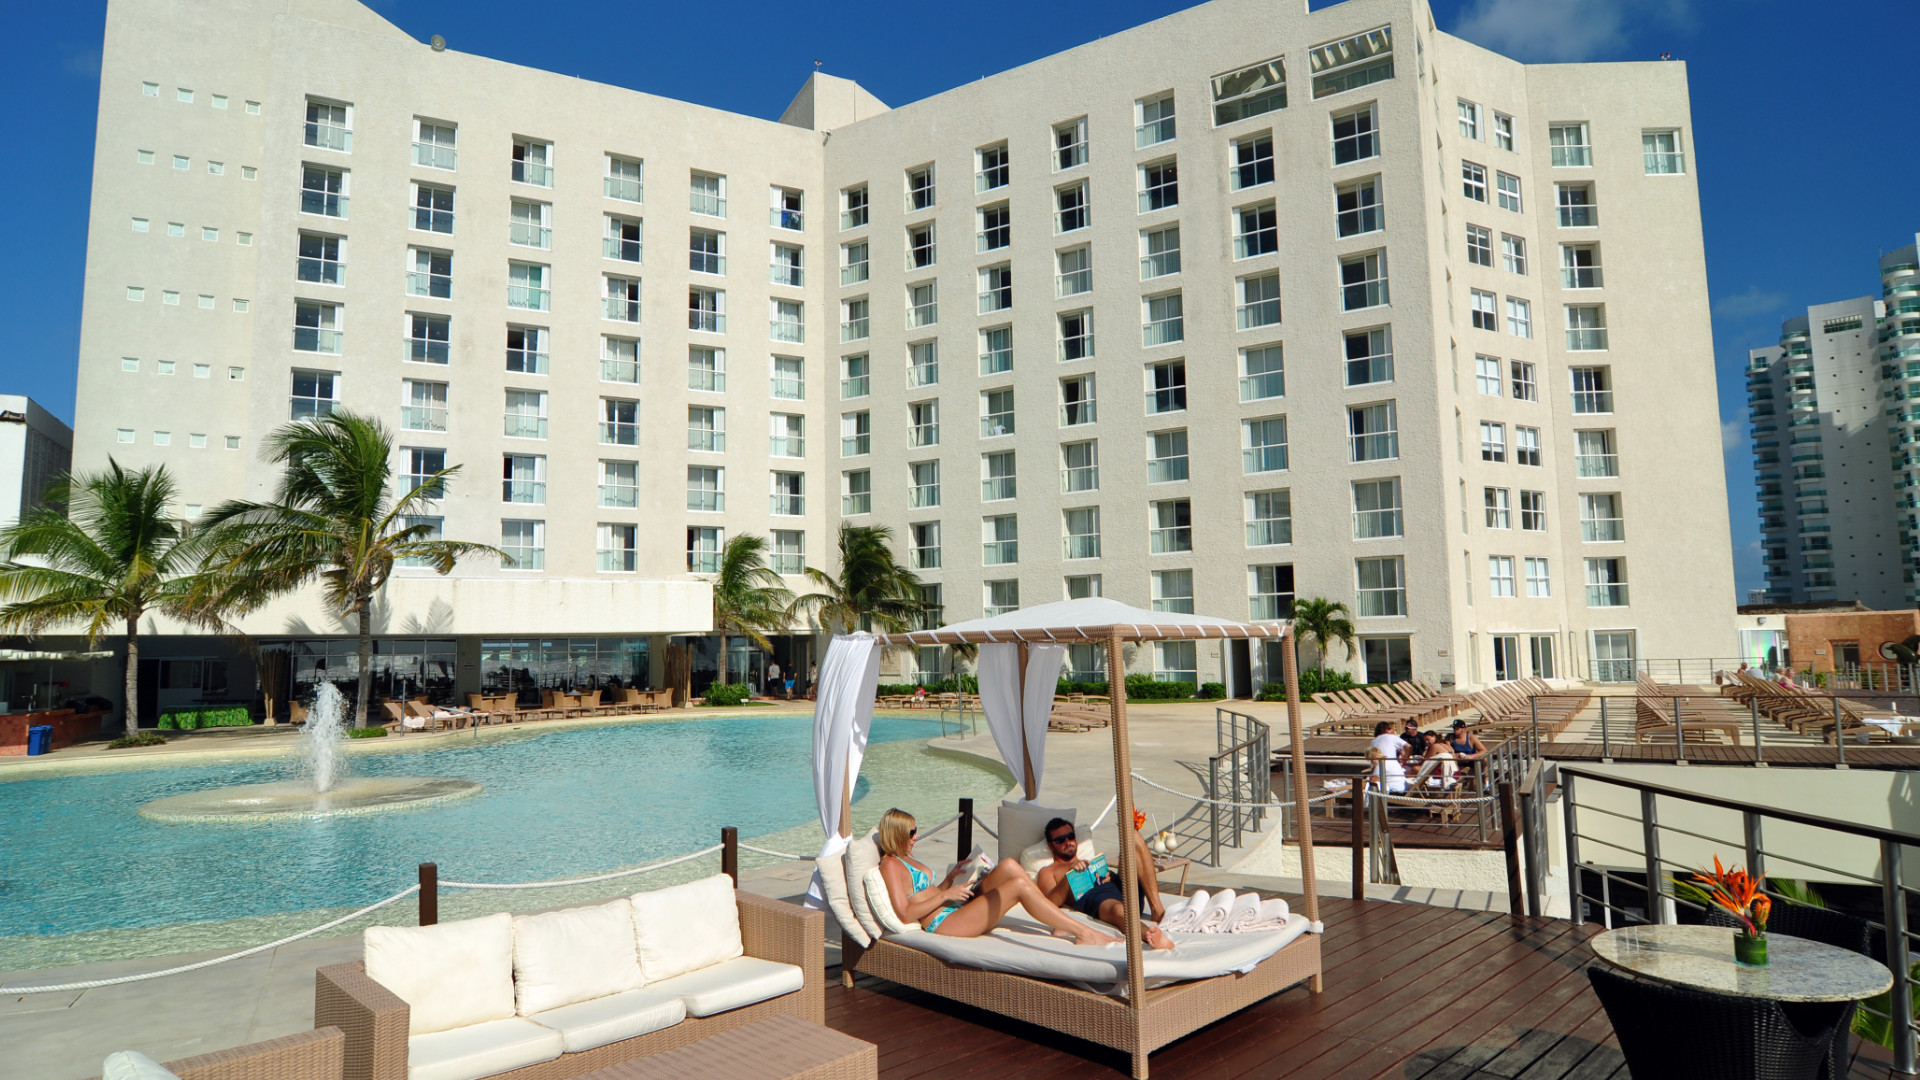 Share Cancun - Hoteles - Sunset Royal Beach Resort | Hotel